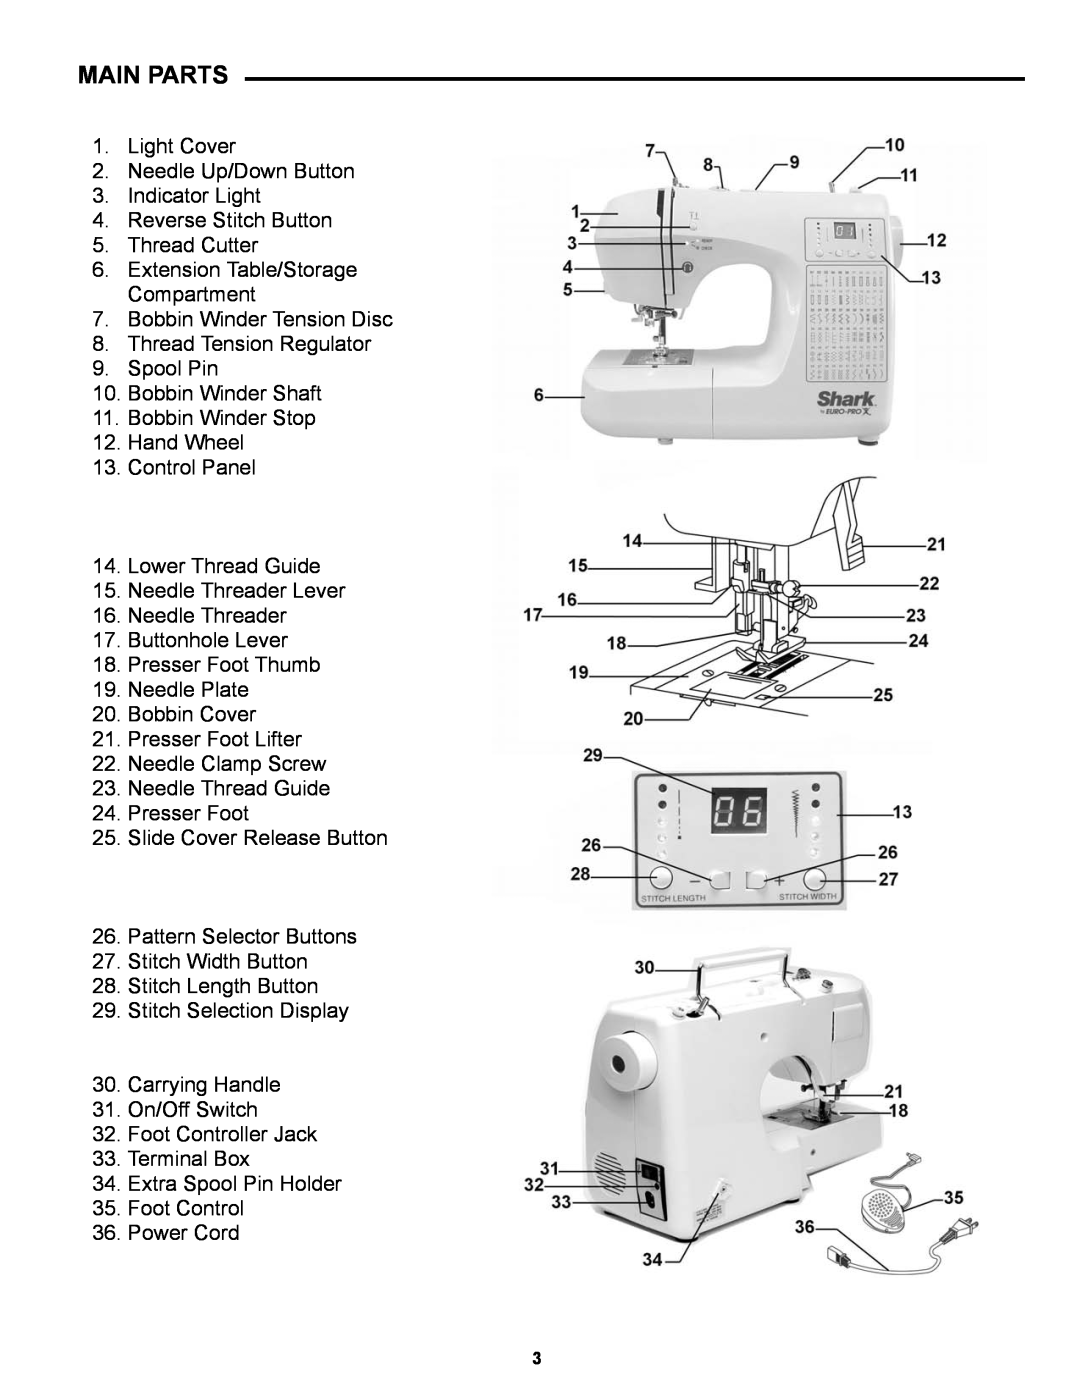 Shark 9015 instruction manual Main Parts 